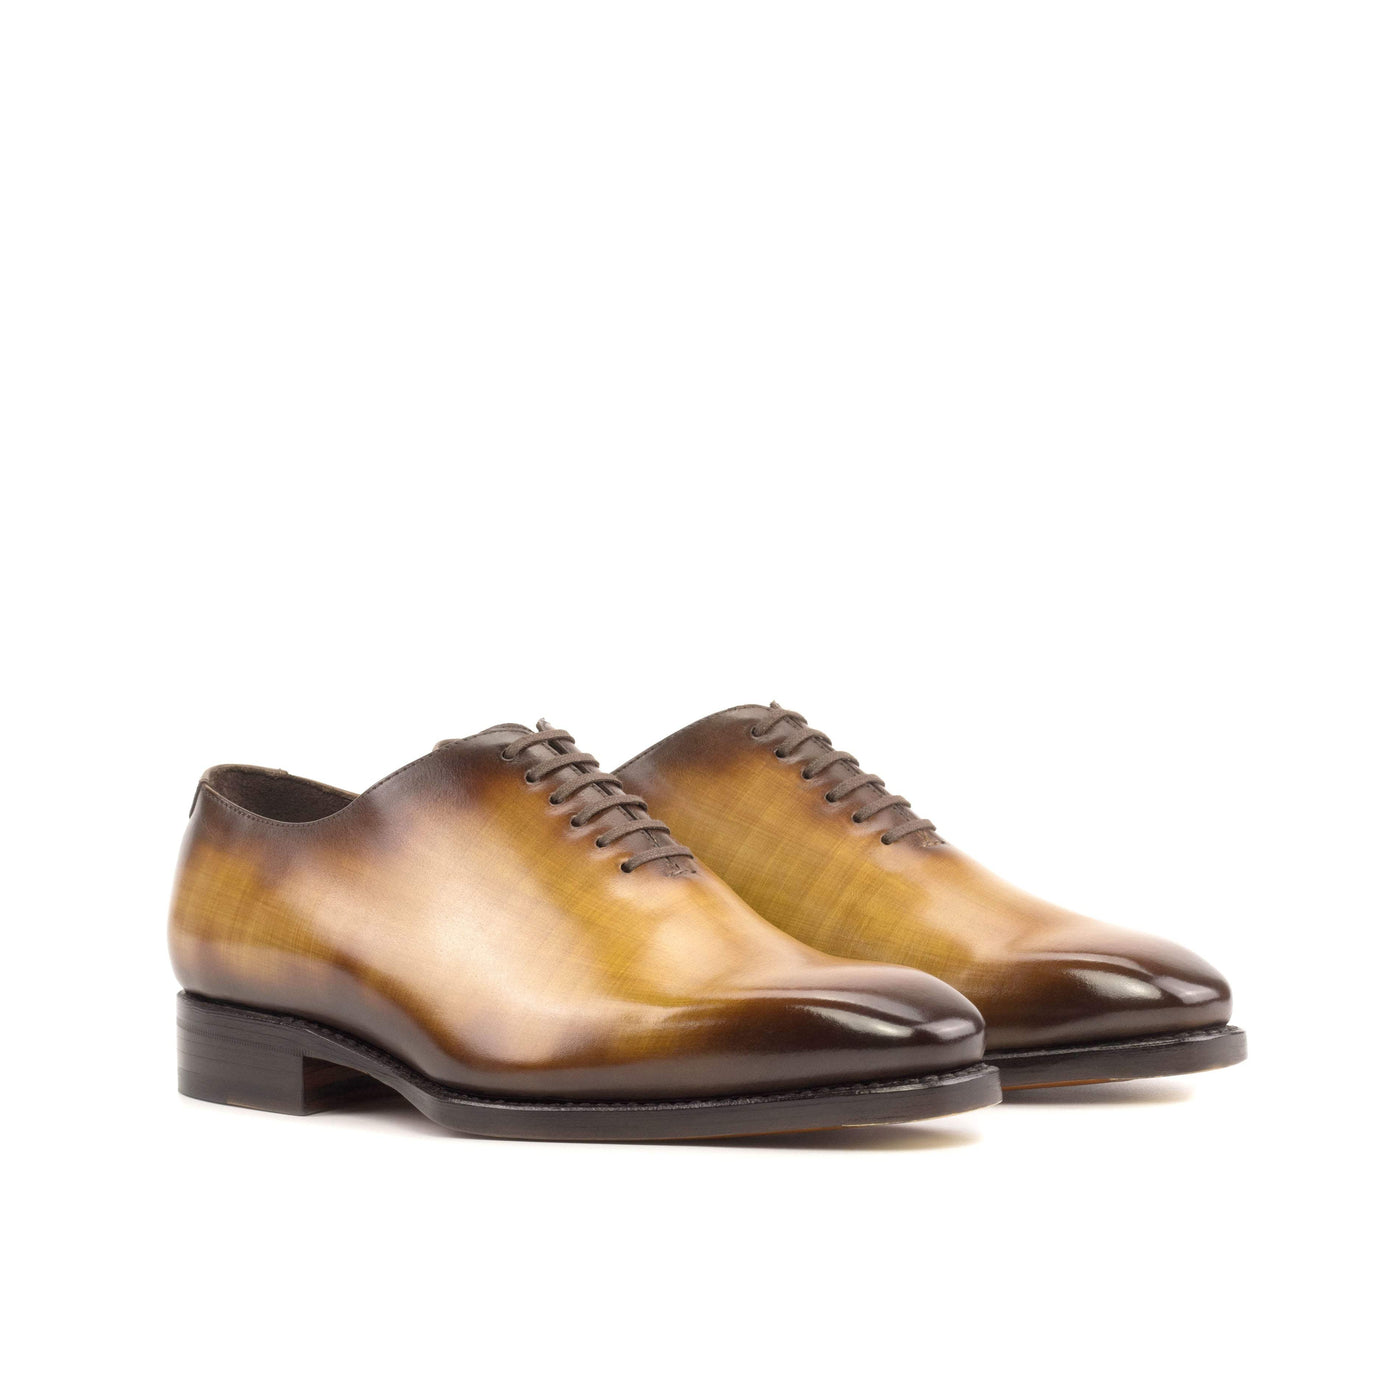 Men's Wholecut Shoes Patina Leather Goodyear Welt Brown 5541 6- MERRIMIUM